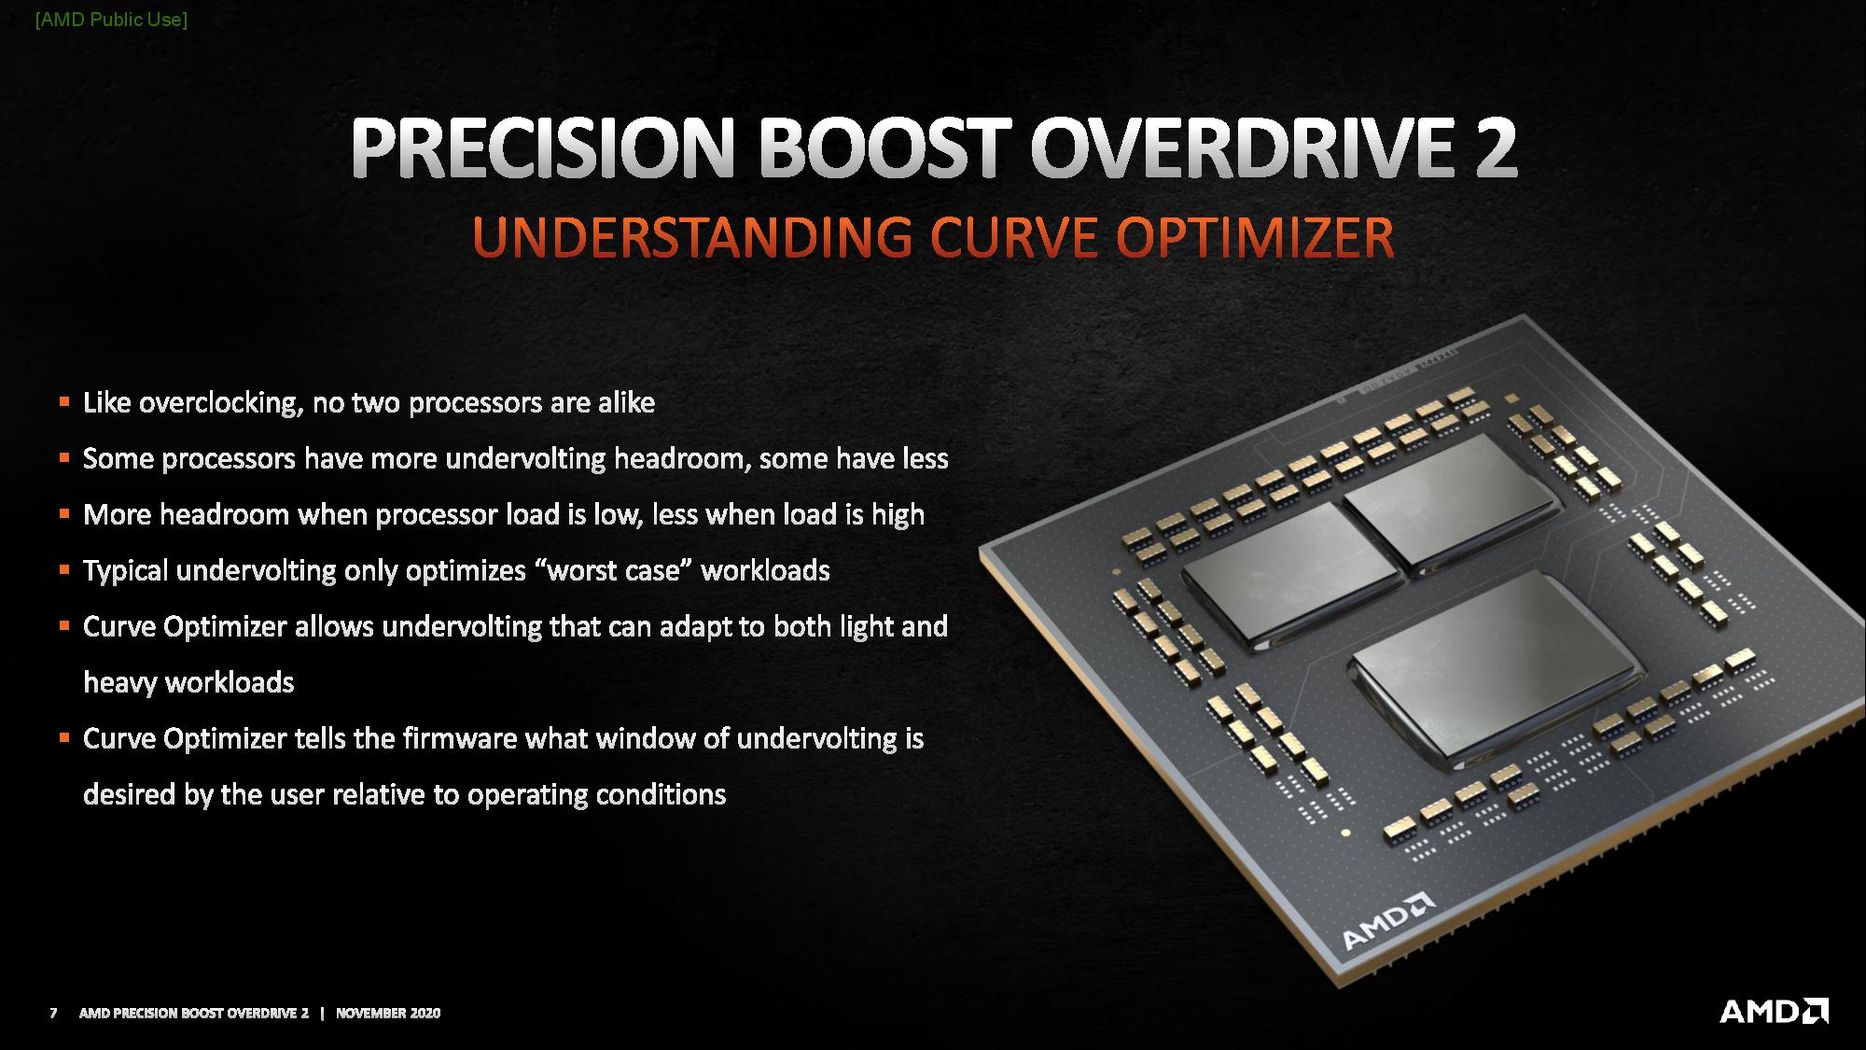 amd ryzen 5000 series precision boost overdrive 2 page 007 videocardz AMD เปิดตัวฟีเจอร์ Undervolting Action ใน Precision Boost Overdrive 2 พร้อมรองรับการทำงานในซีพียู AMD RYZEN 5000ซีรี่ย์ให้ทำงานได้เต็มประสิทธิภาพมากขึ้น 